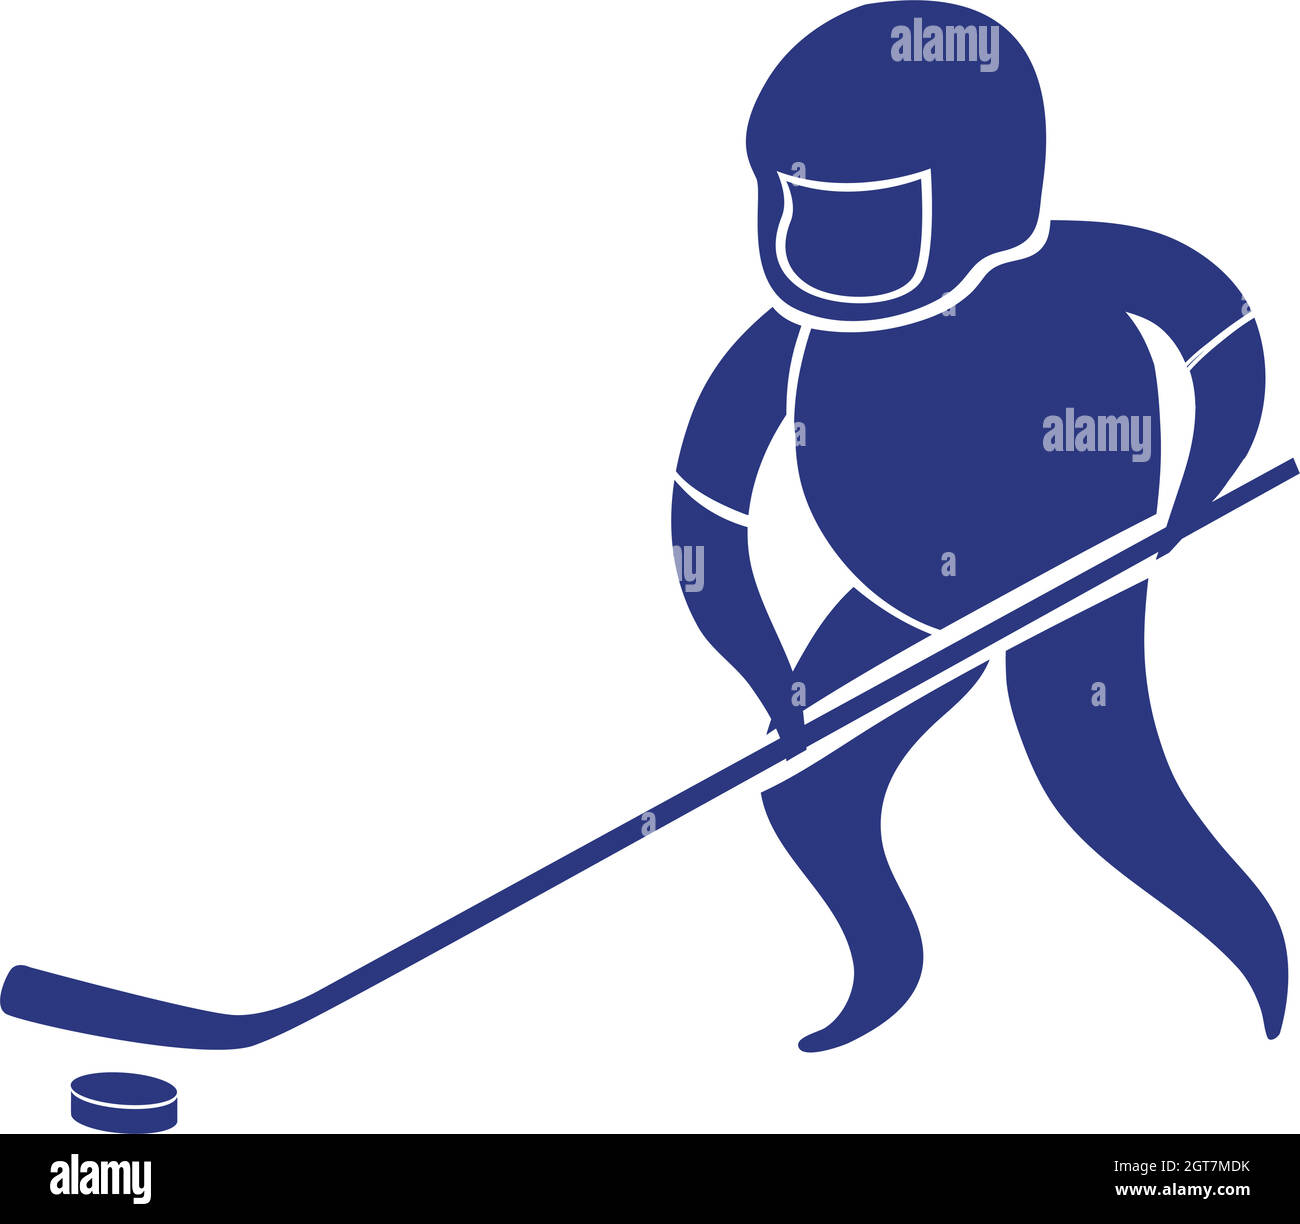 Sport icon design for ground hockey Stock Vector